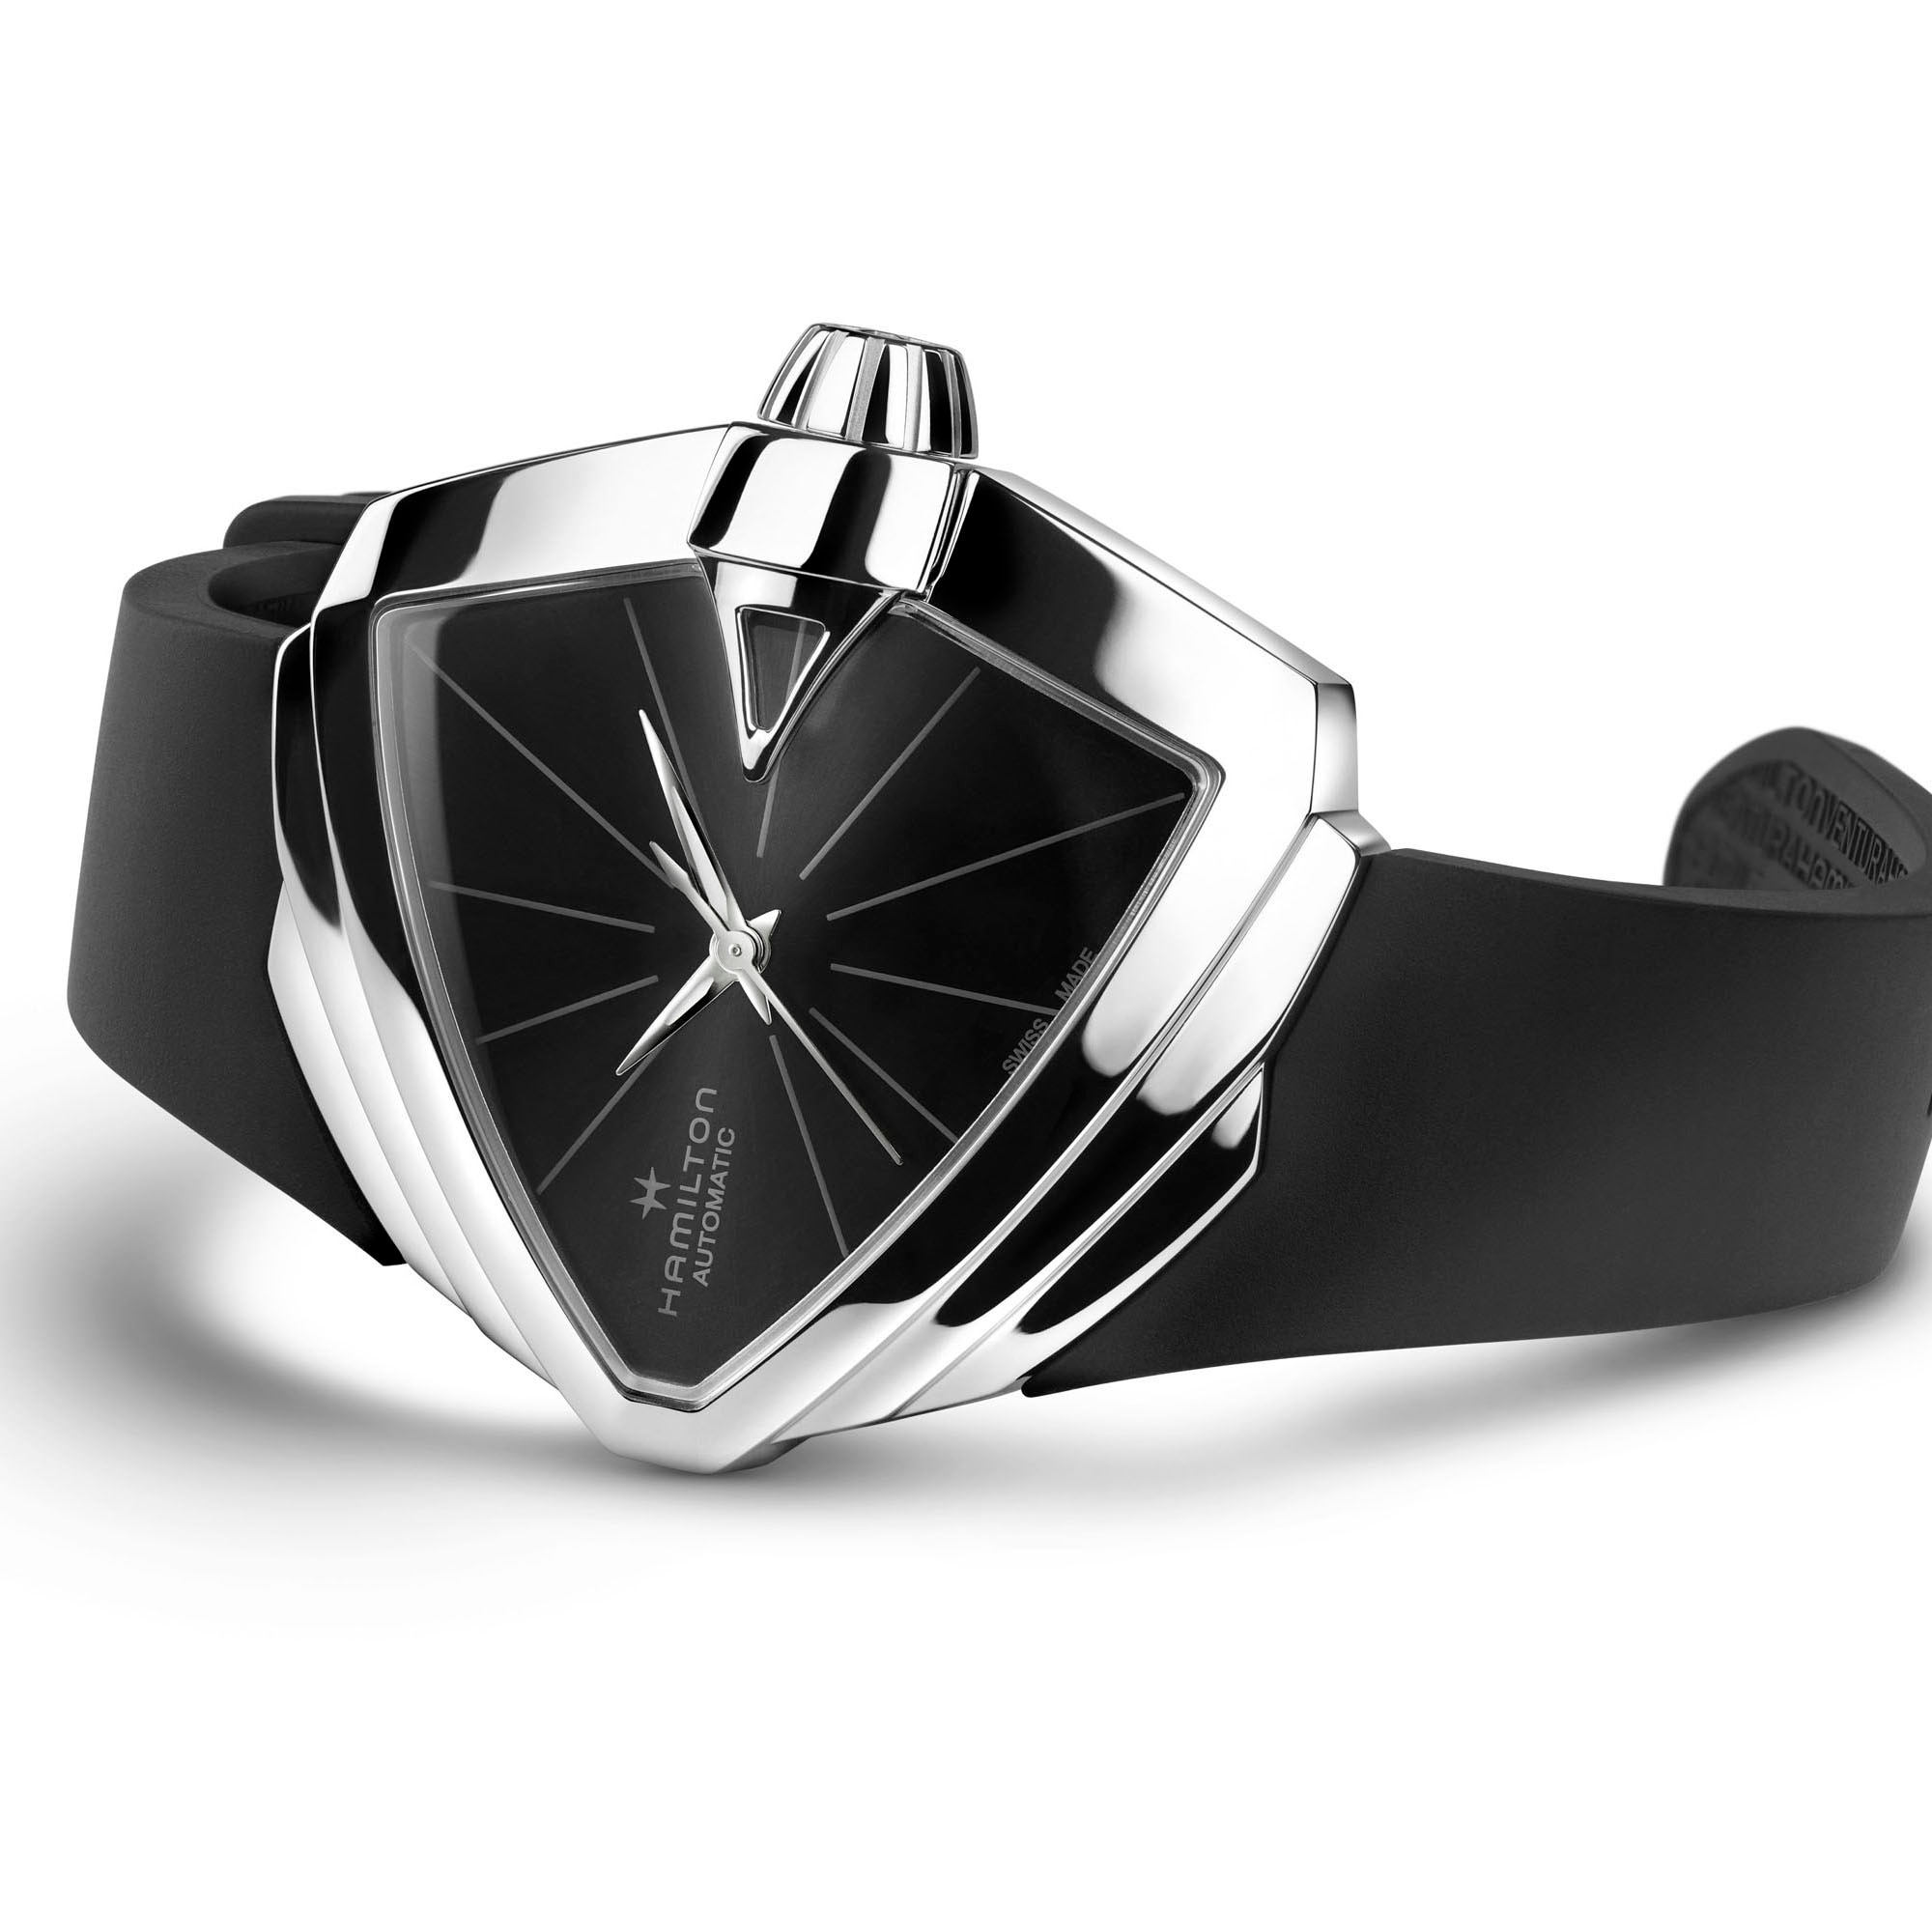 Ventura S Auto - Black dial - Black strap - H24105330 | Hamilton Watch